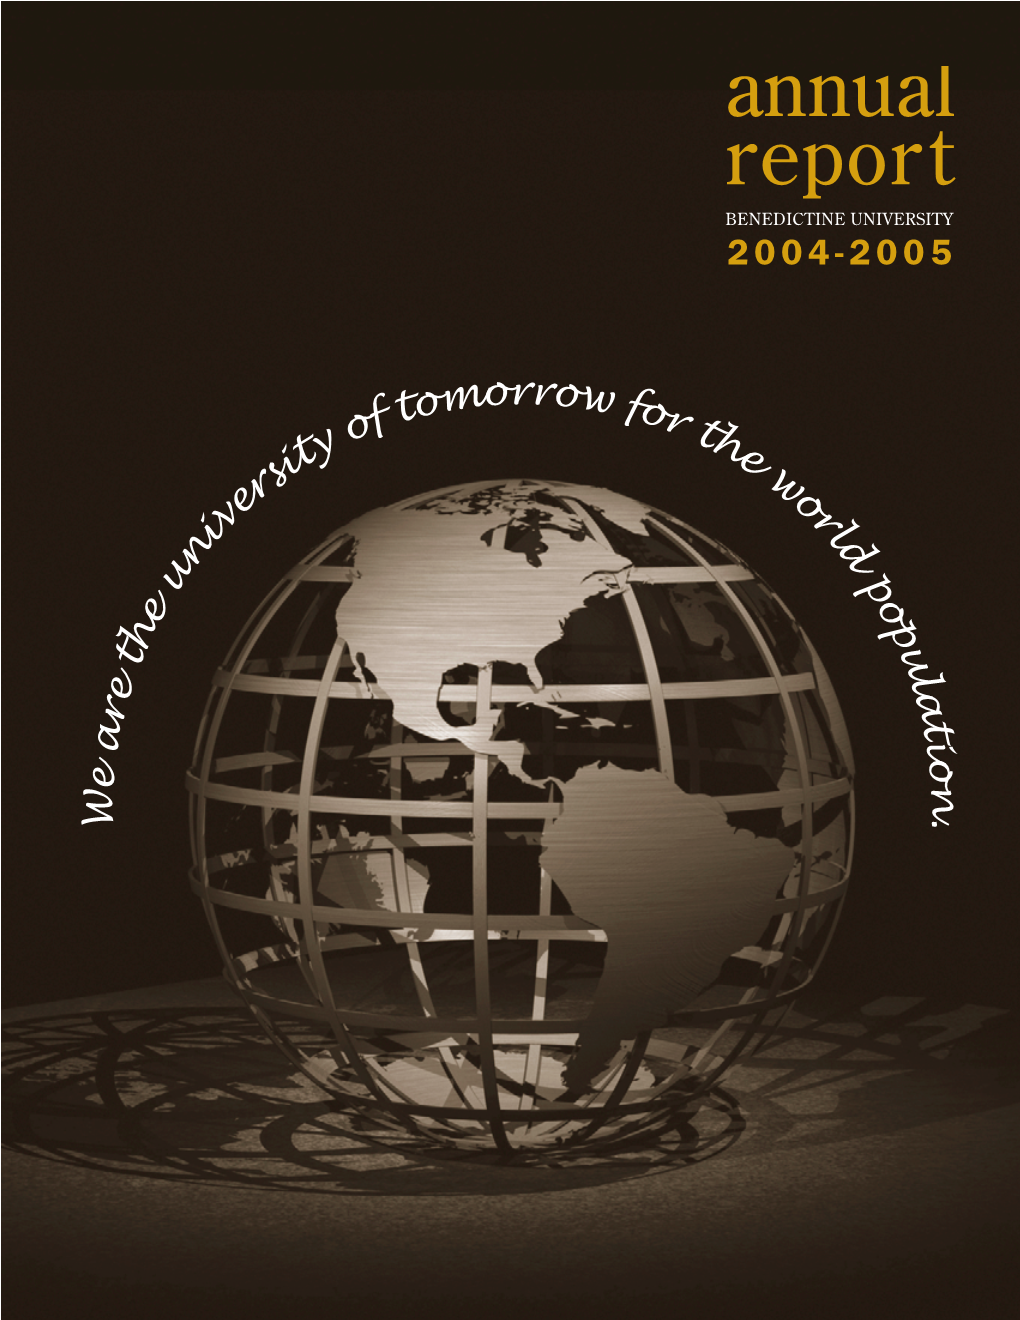 Annual Report BENEDICTINE UNIVERSITY 2004-2005